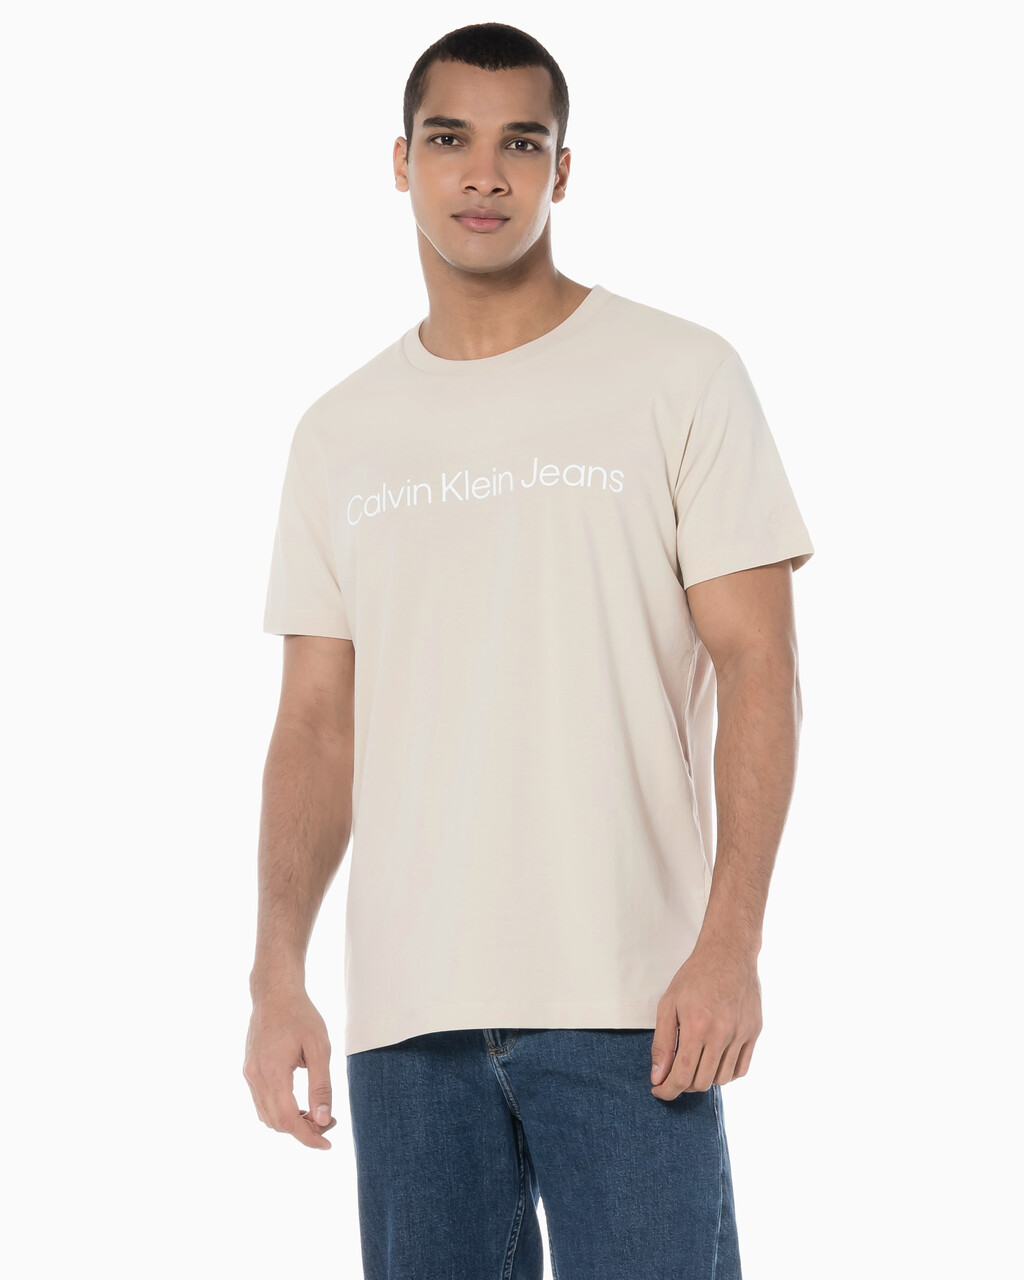 Buy 남성 레귤러핏 인스티튜셔널 로고 스트레치 반팔 티셔츠 in color CLASSIC BEIGE